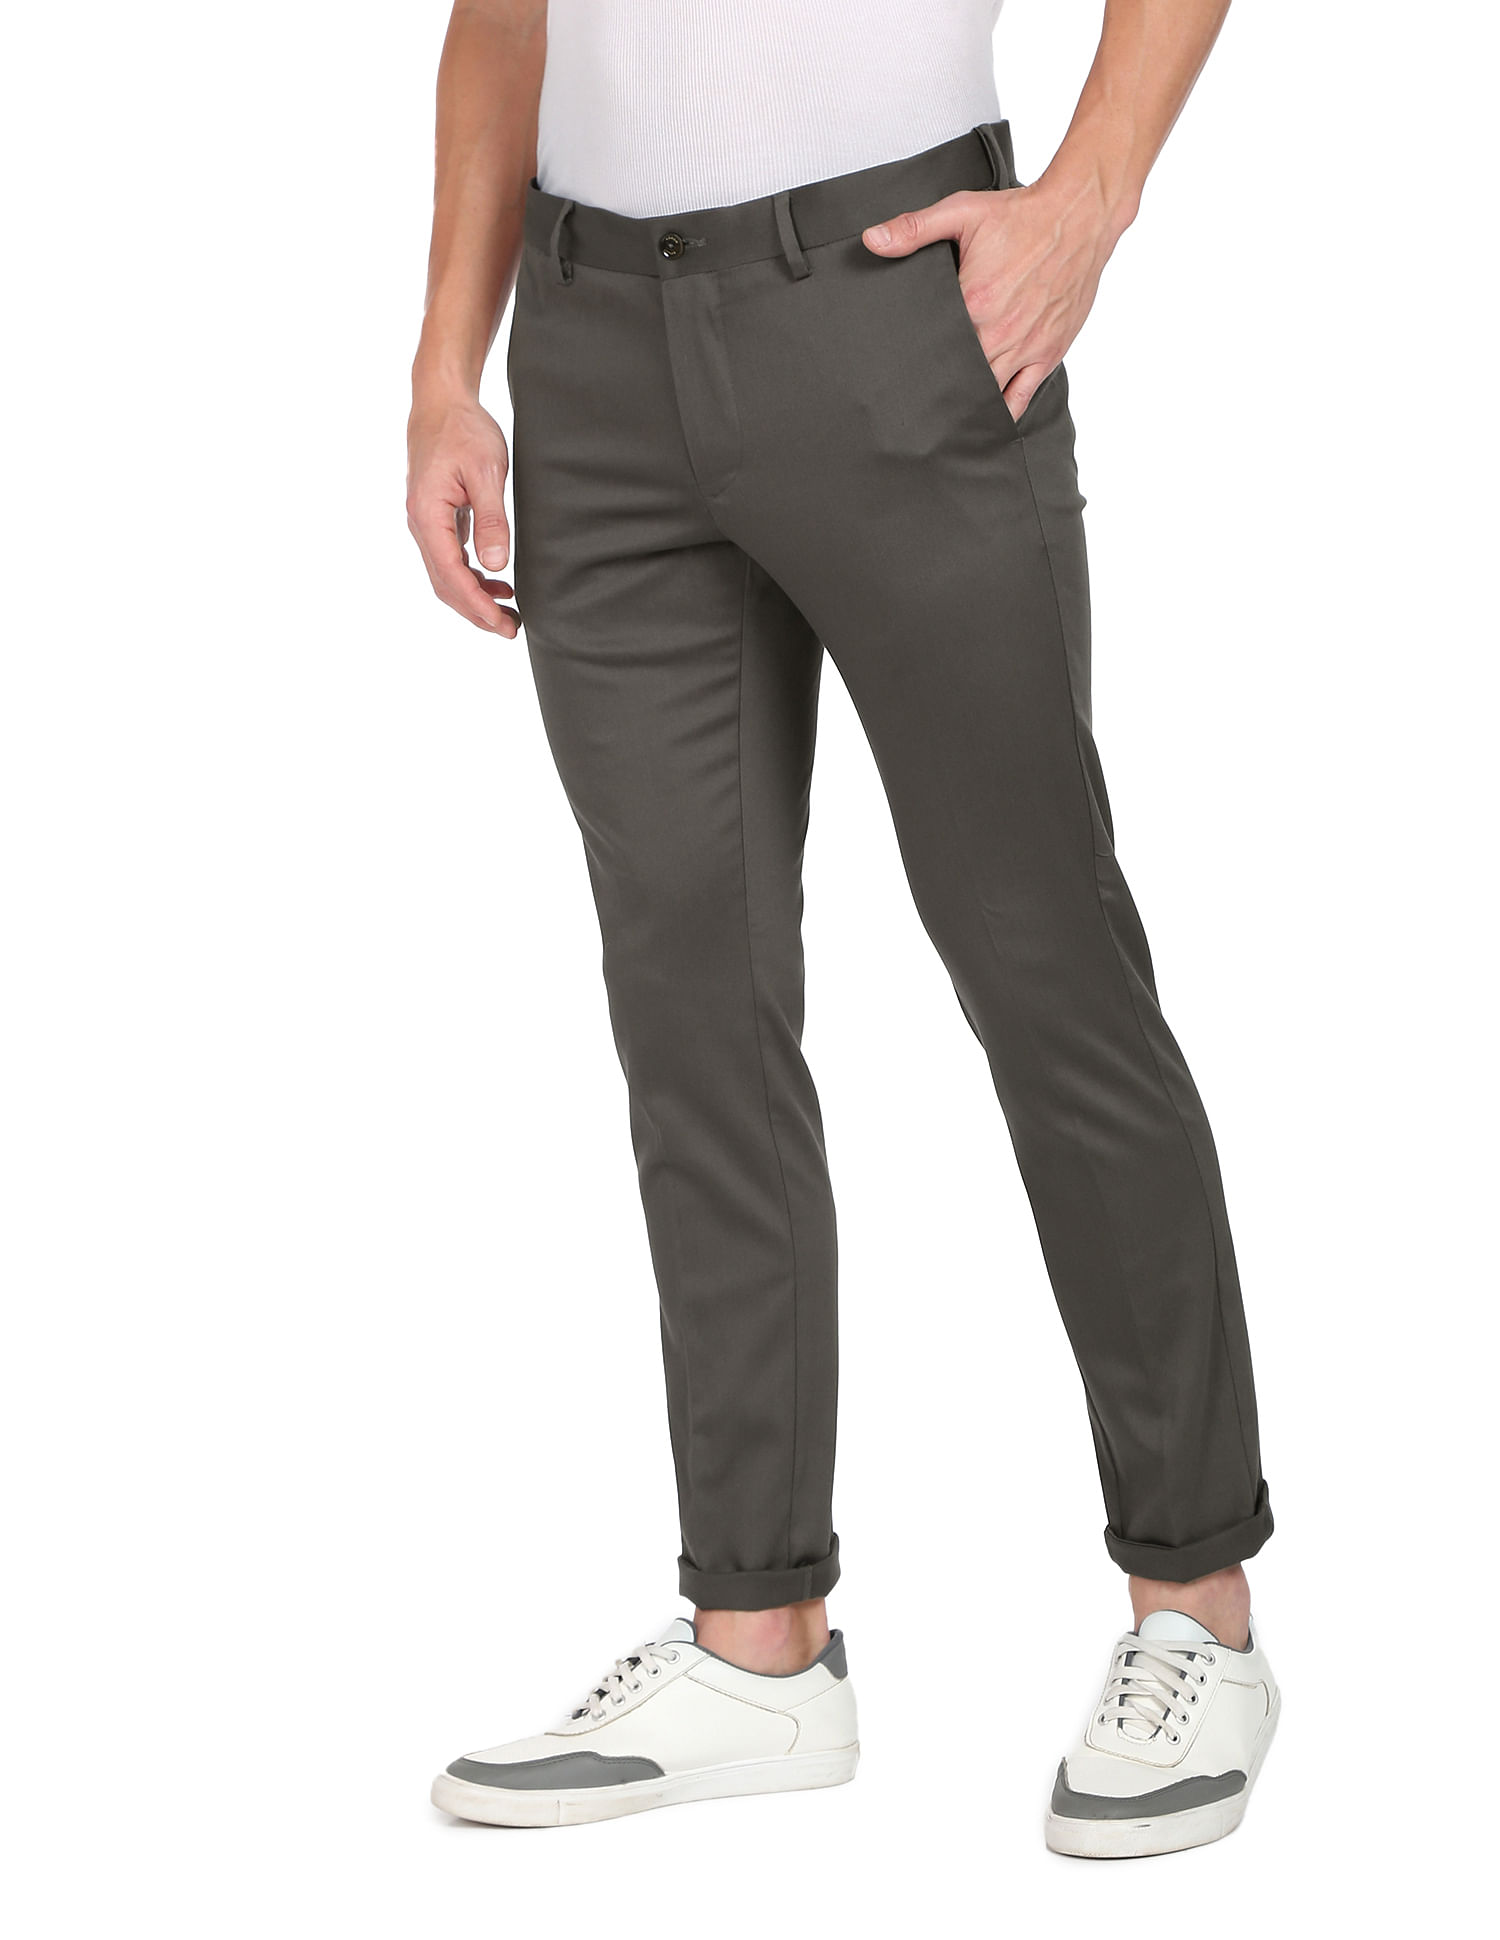 Boltini Italy Men's Flat Front Slim Fit Slacks Trousers Dress Pants (Light  Gray, 38x30) - Walmart.com